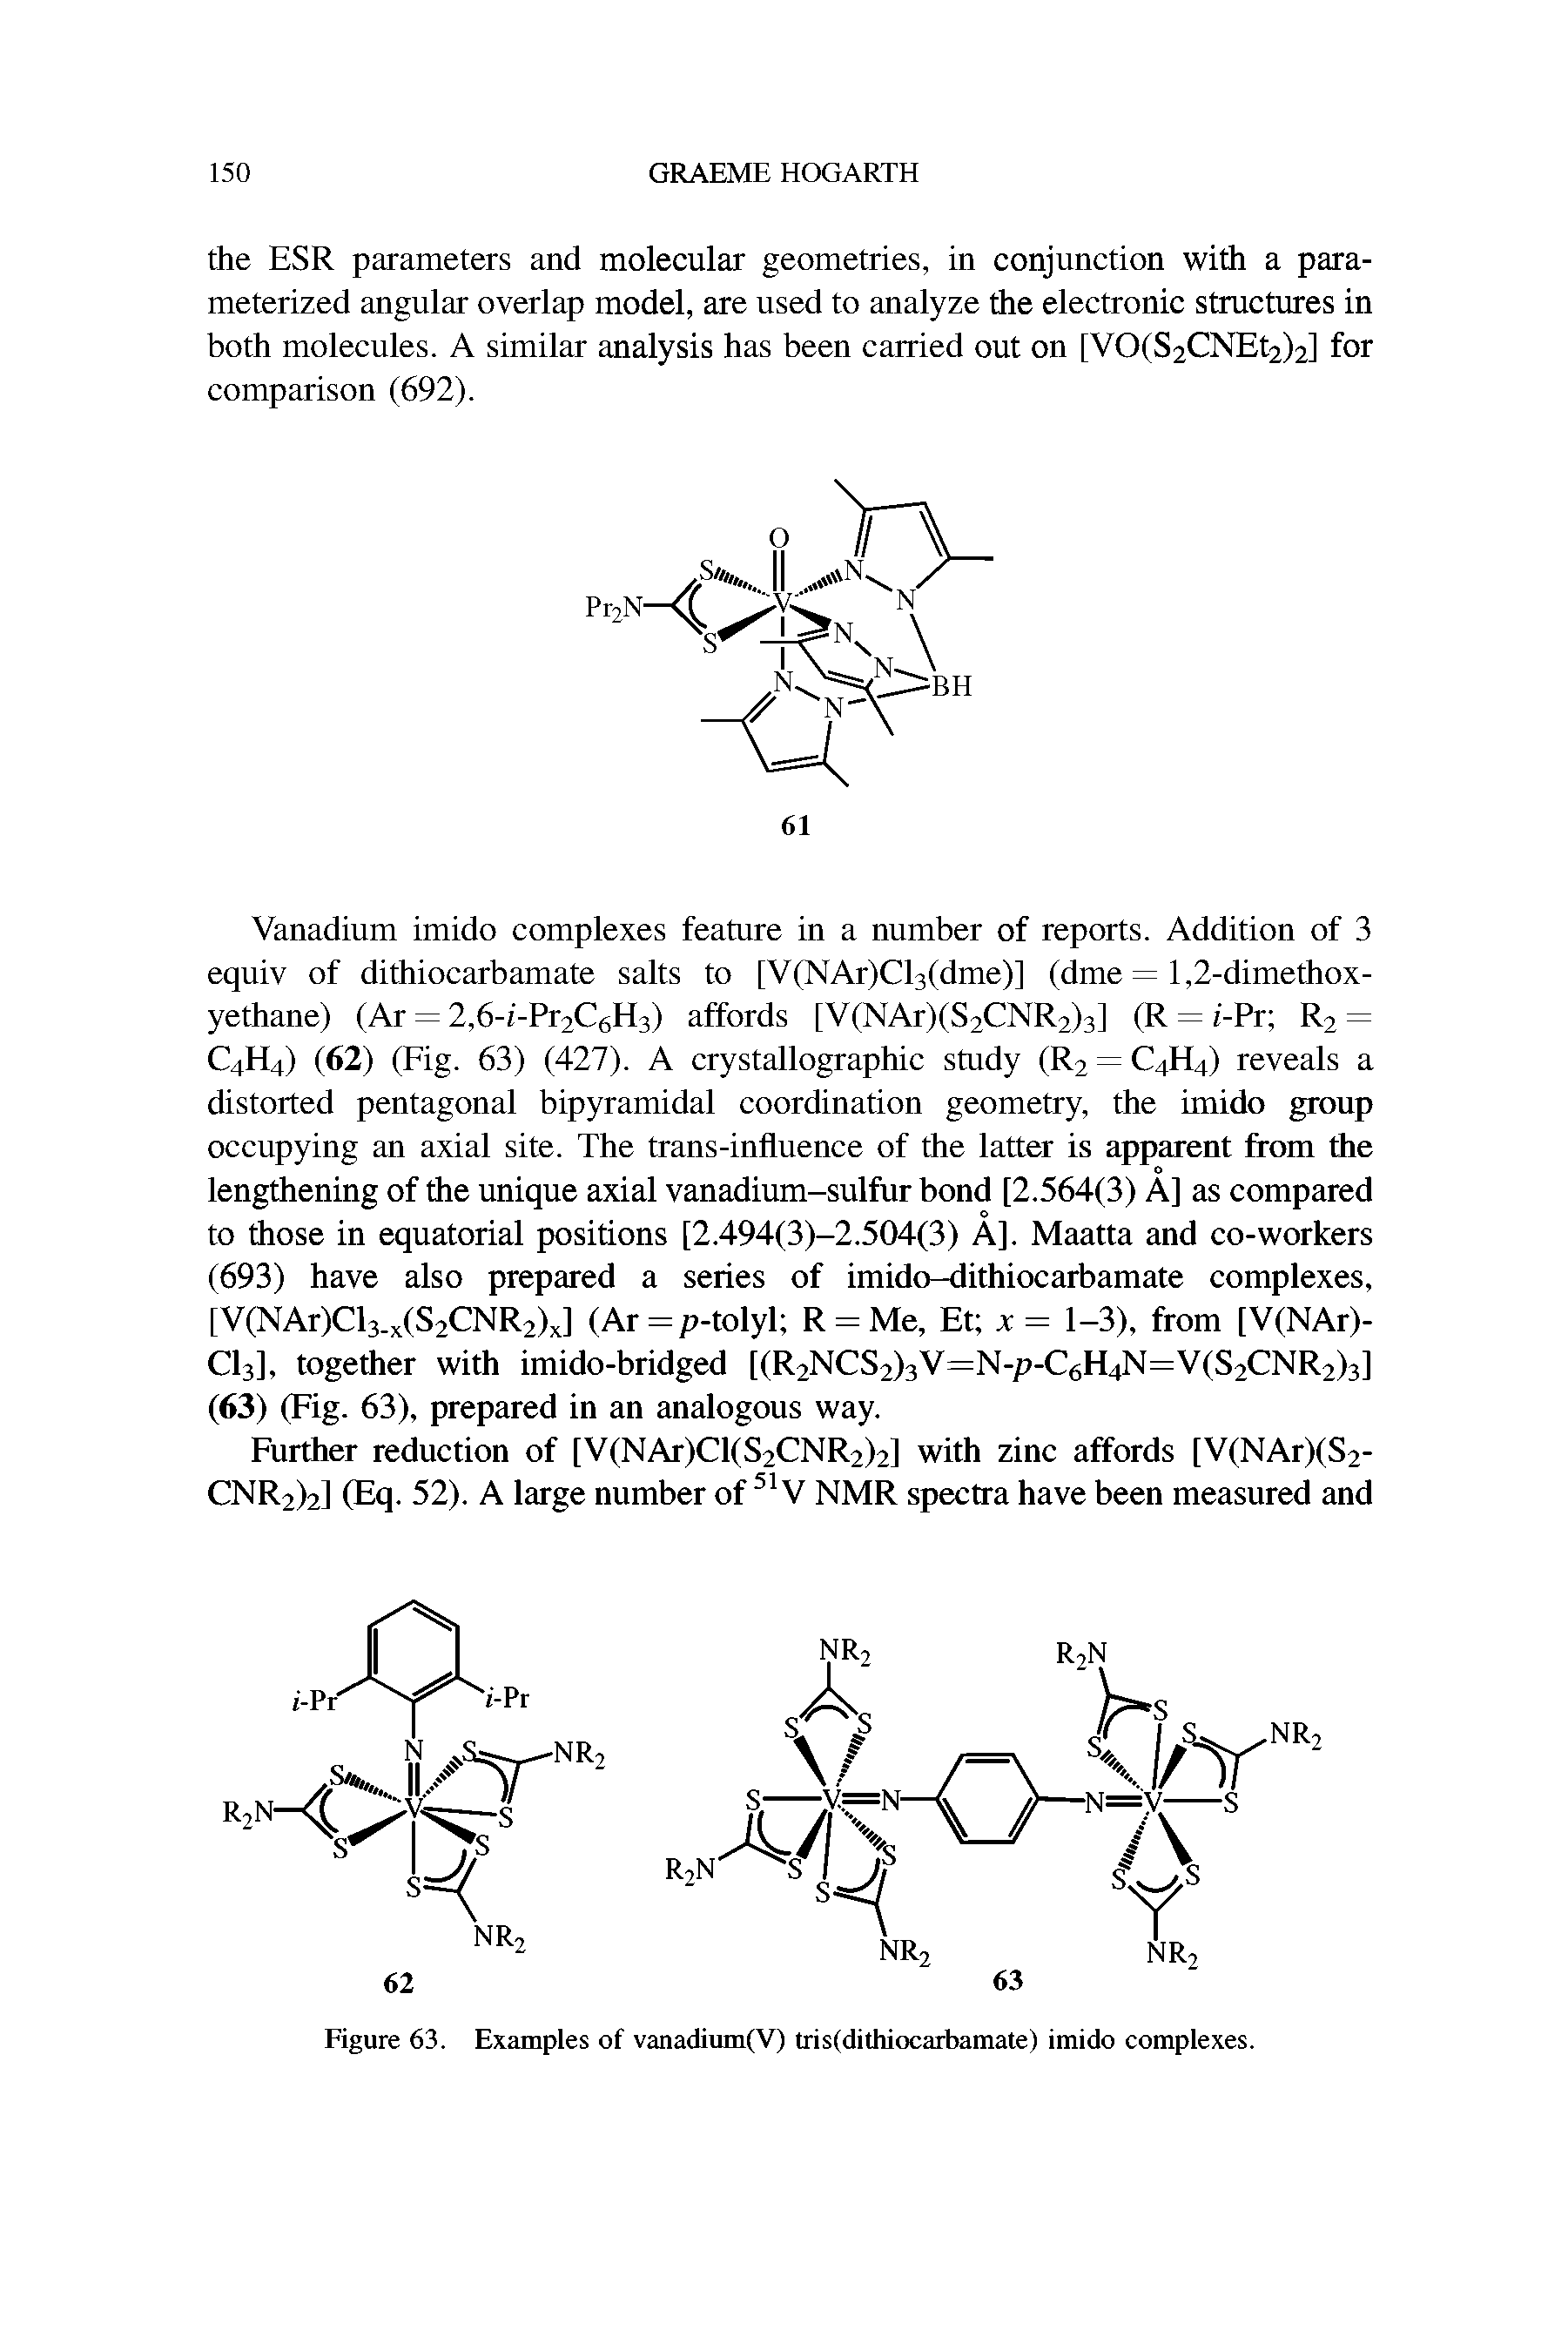 Figure 63. Examples of vanadium(V) tris(dithiocarbamate) imido complexes.